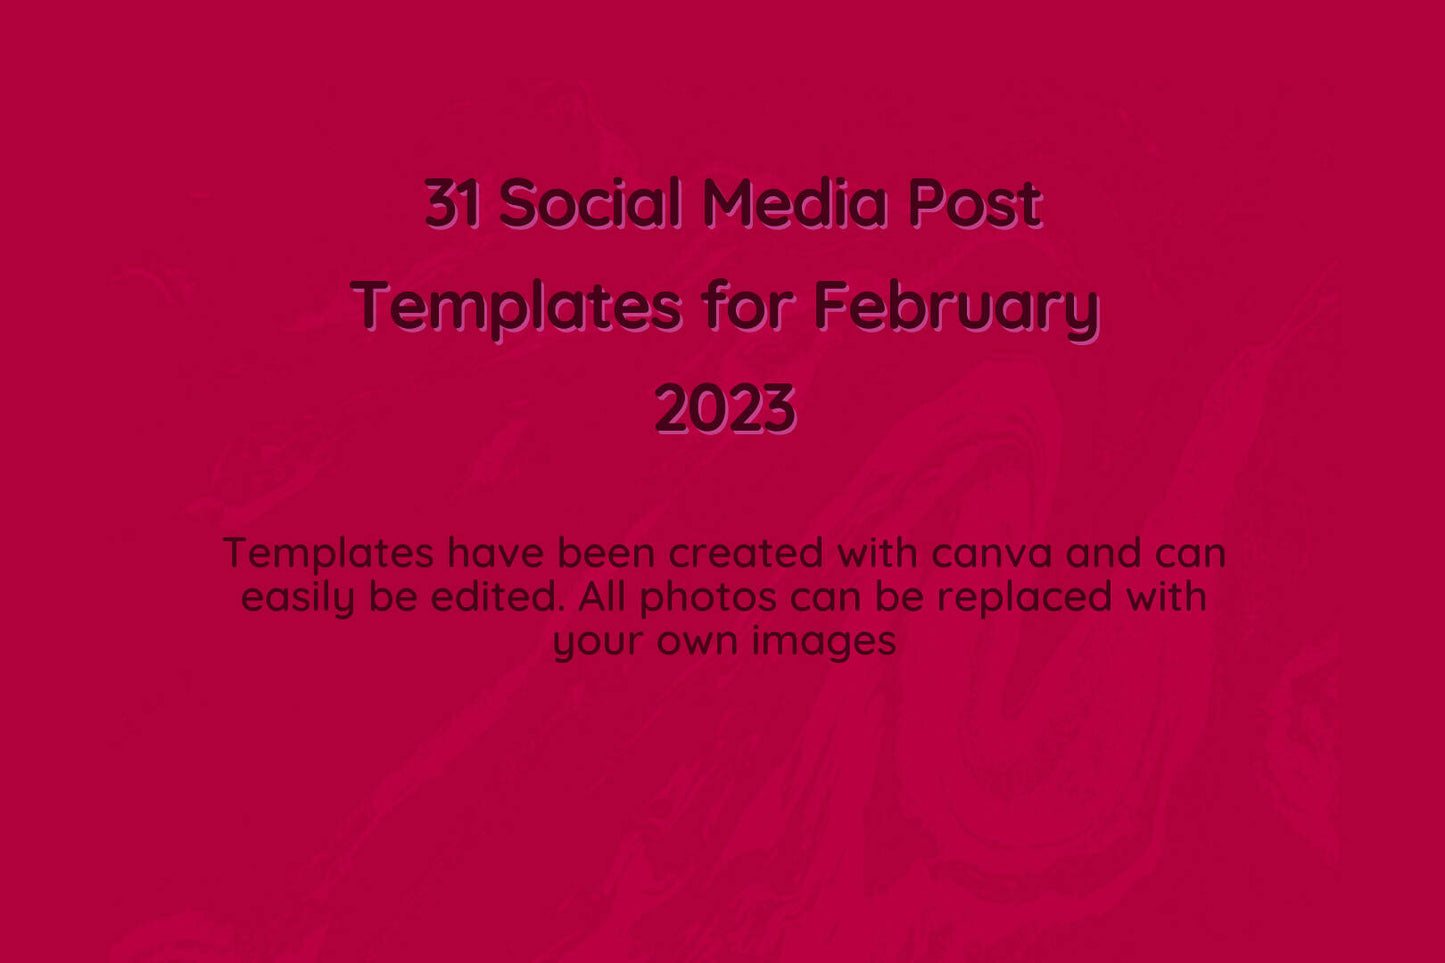 30 Social Media Posts for February